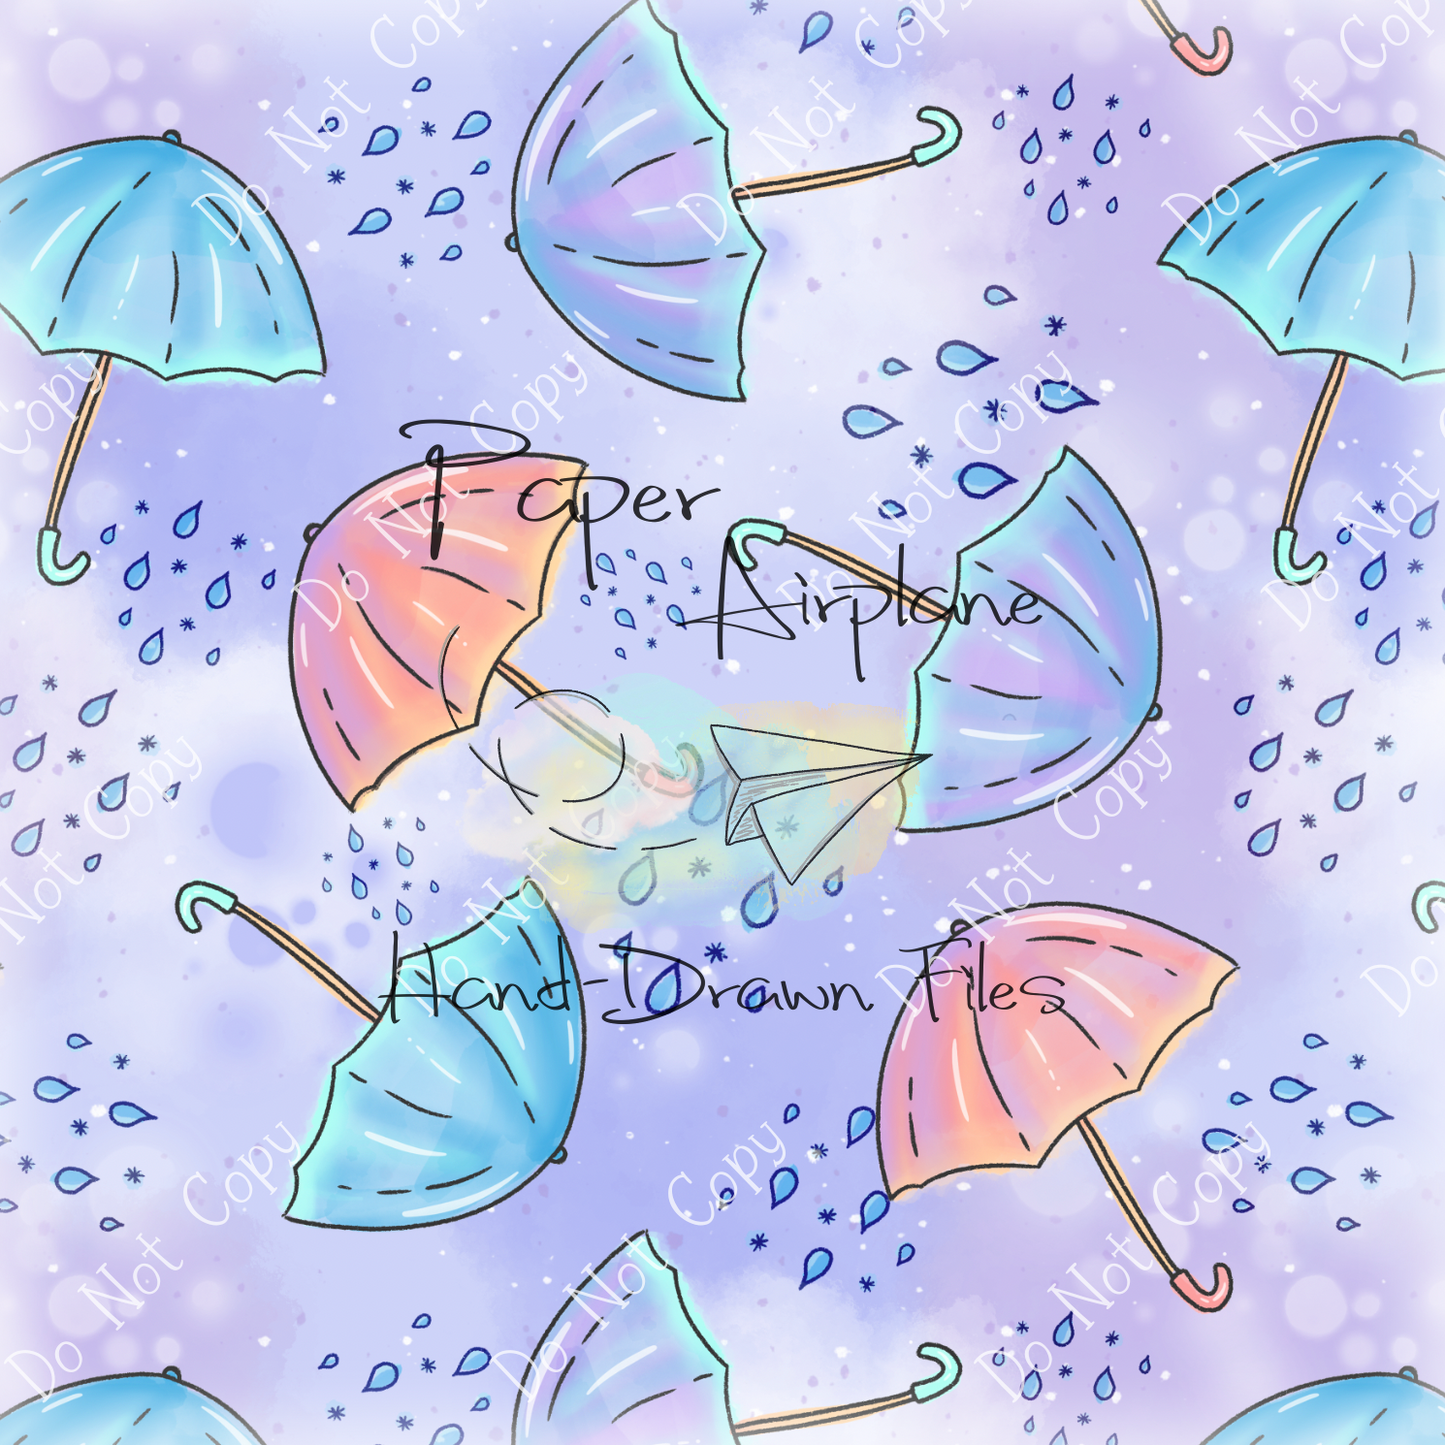 Rainy Day Umbrellas (Cotton Candy)